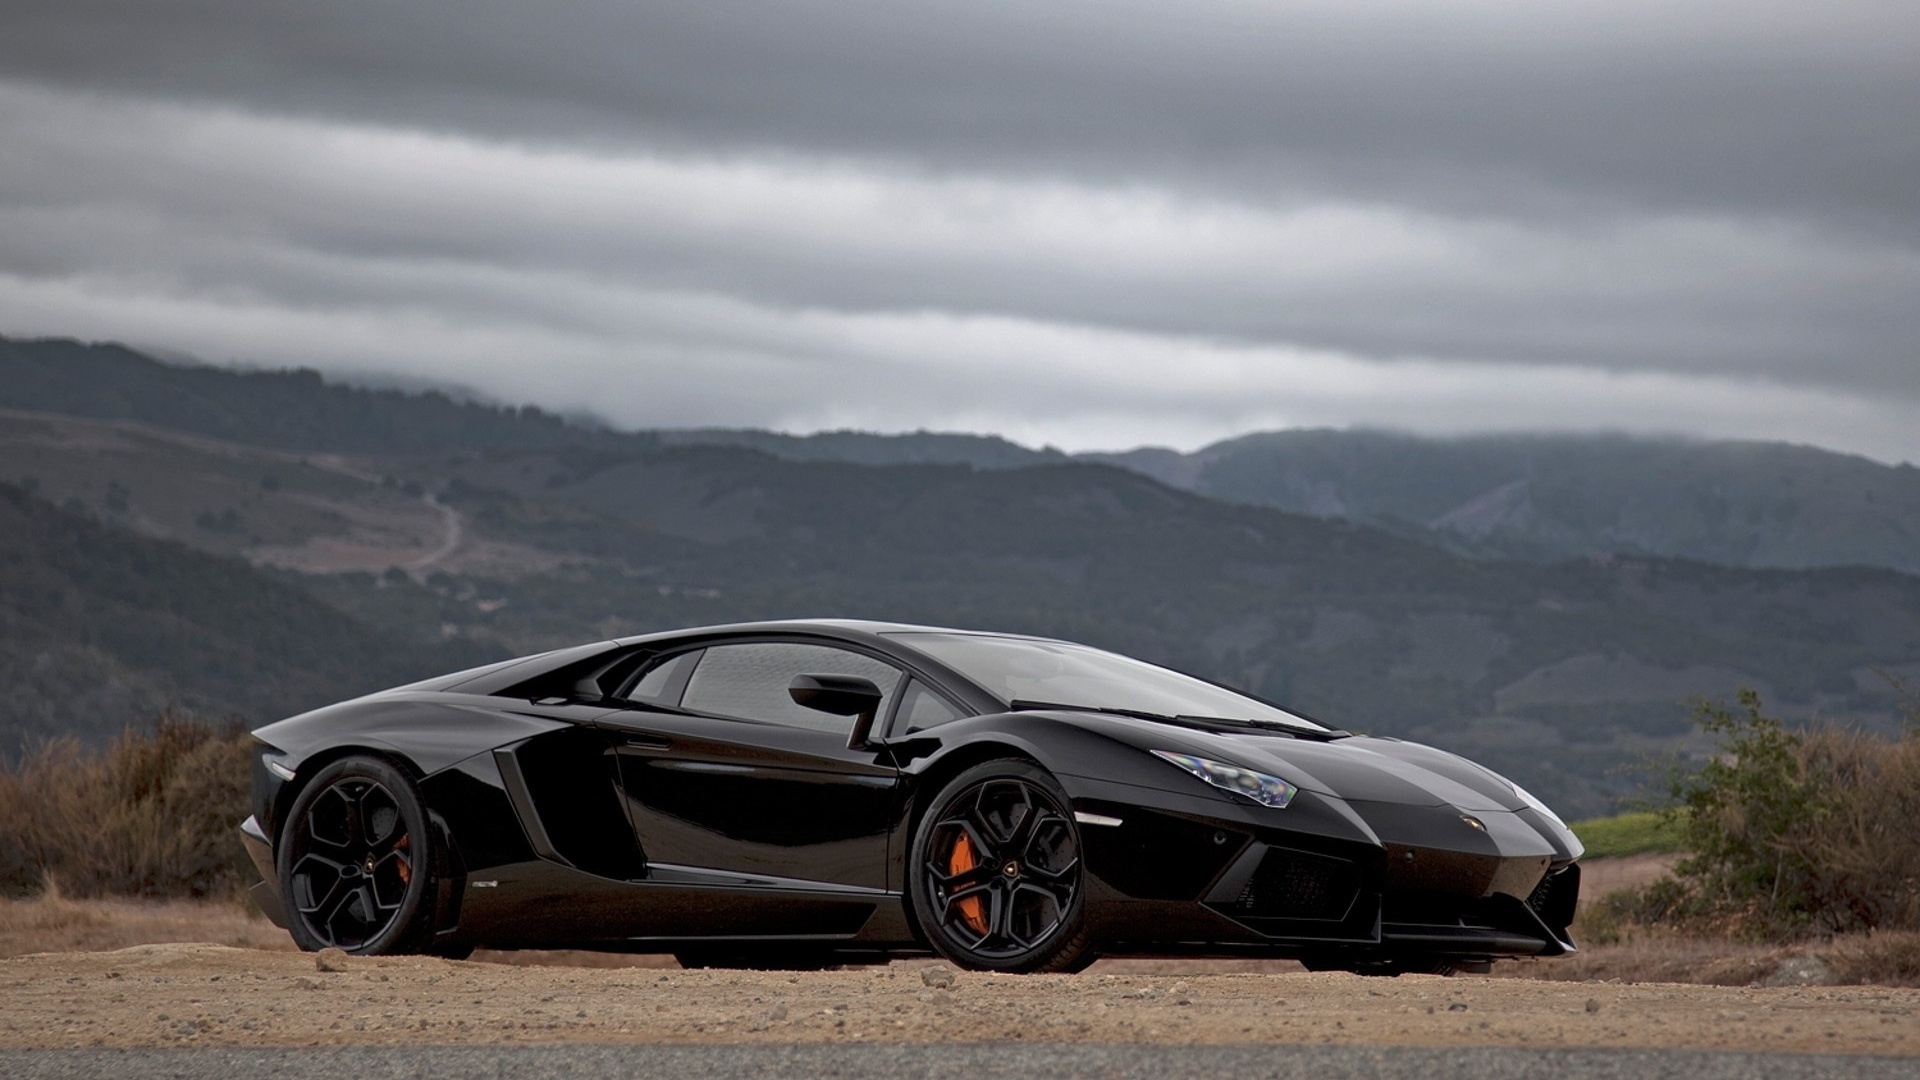 Free download Lamborghini Aventador Black 1080p HD Wallpaper 326 Car